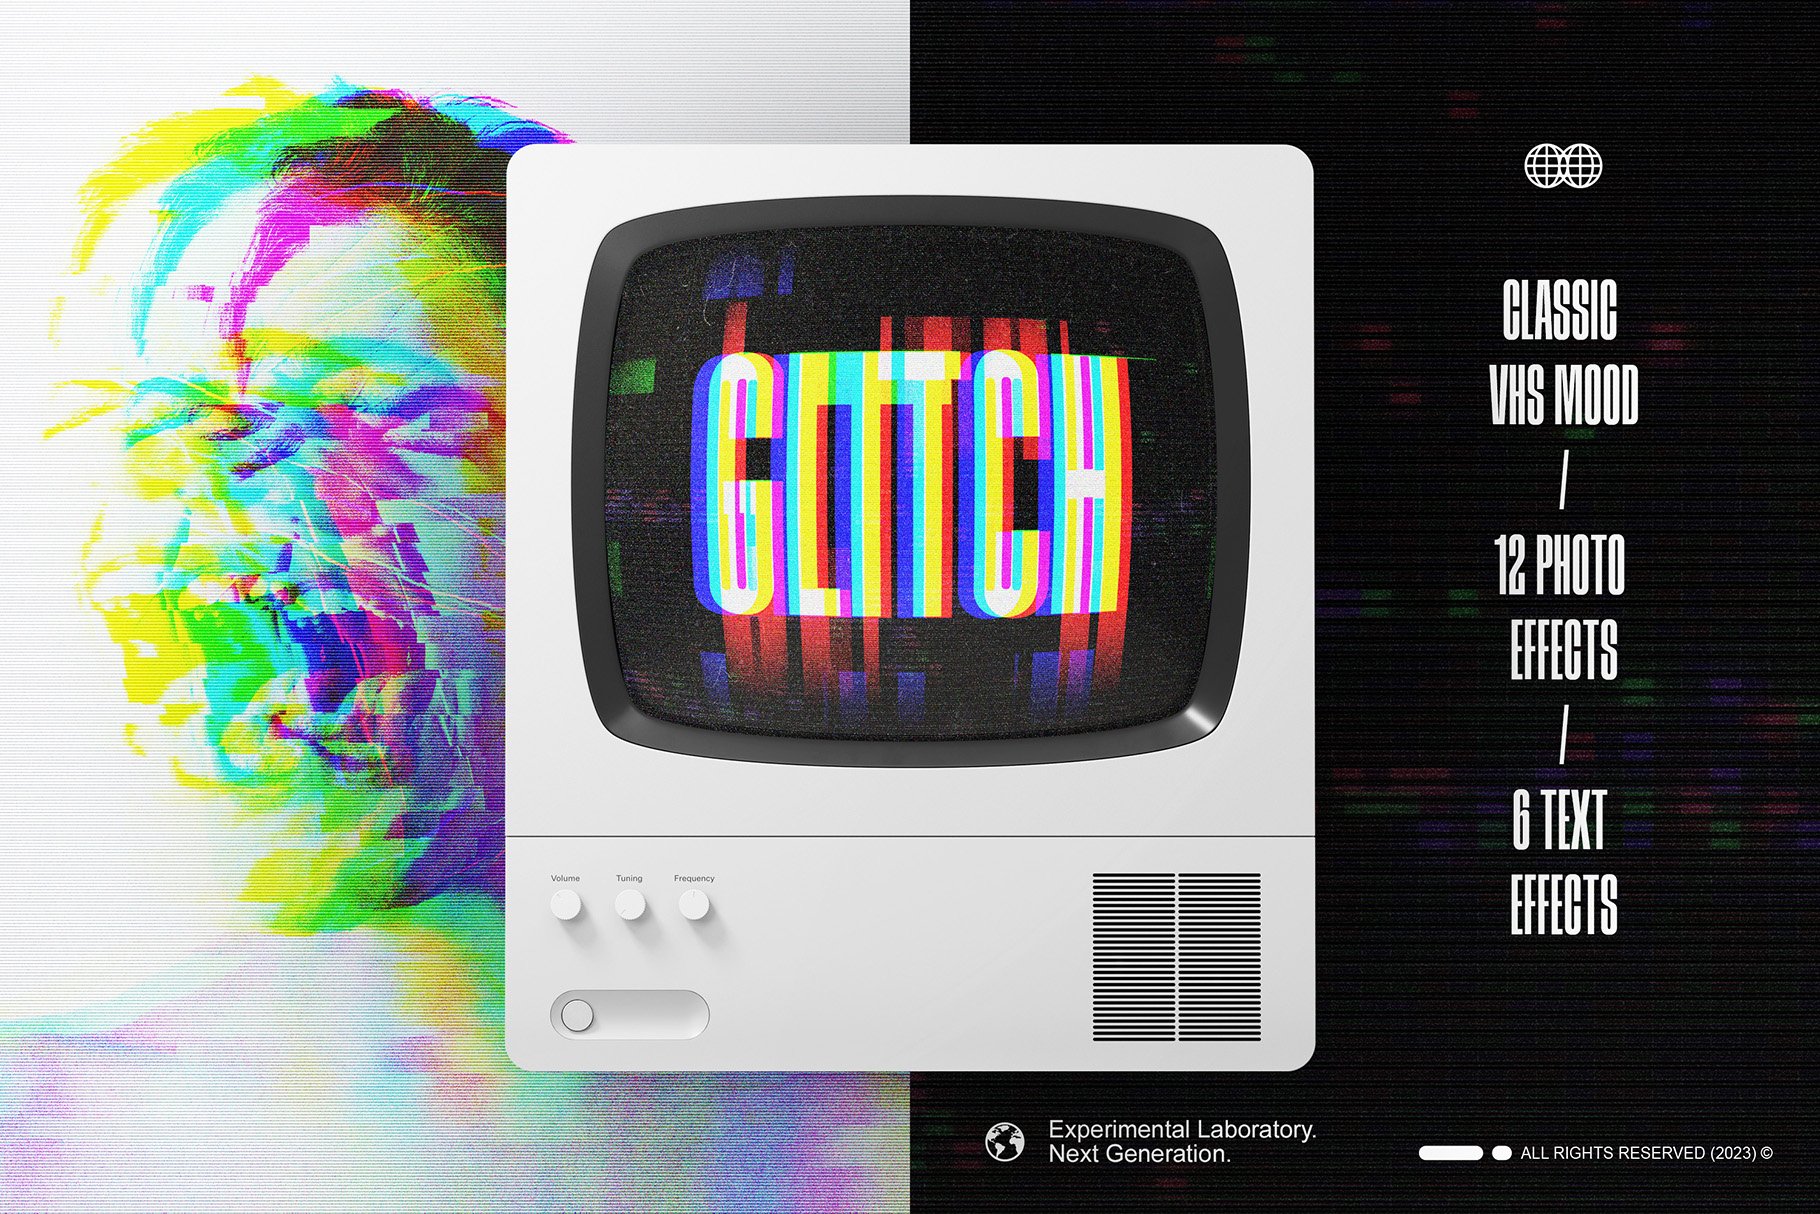 Glitch Art: Exploring The Aesthetics Of Digital Error And